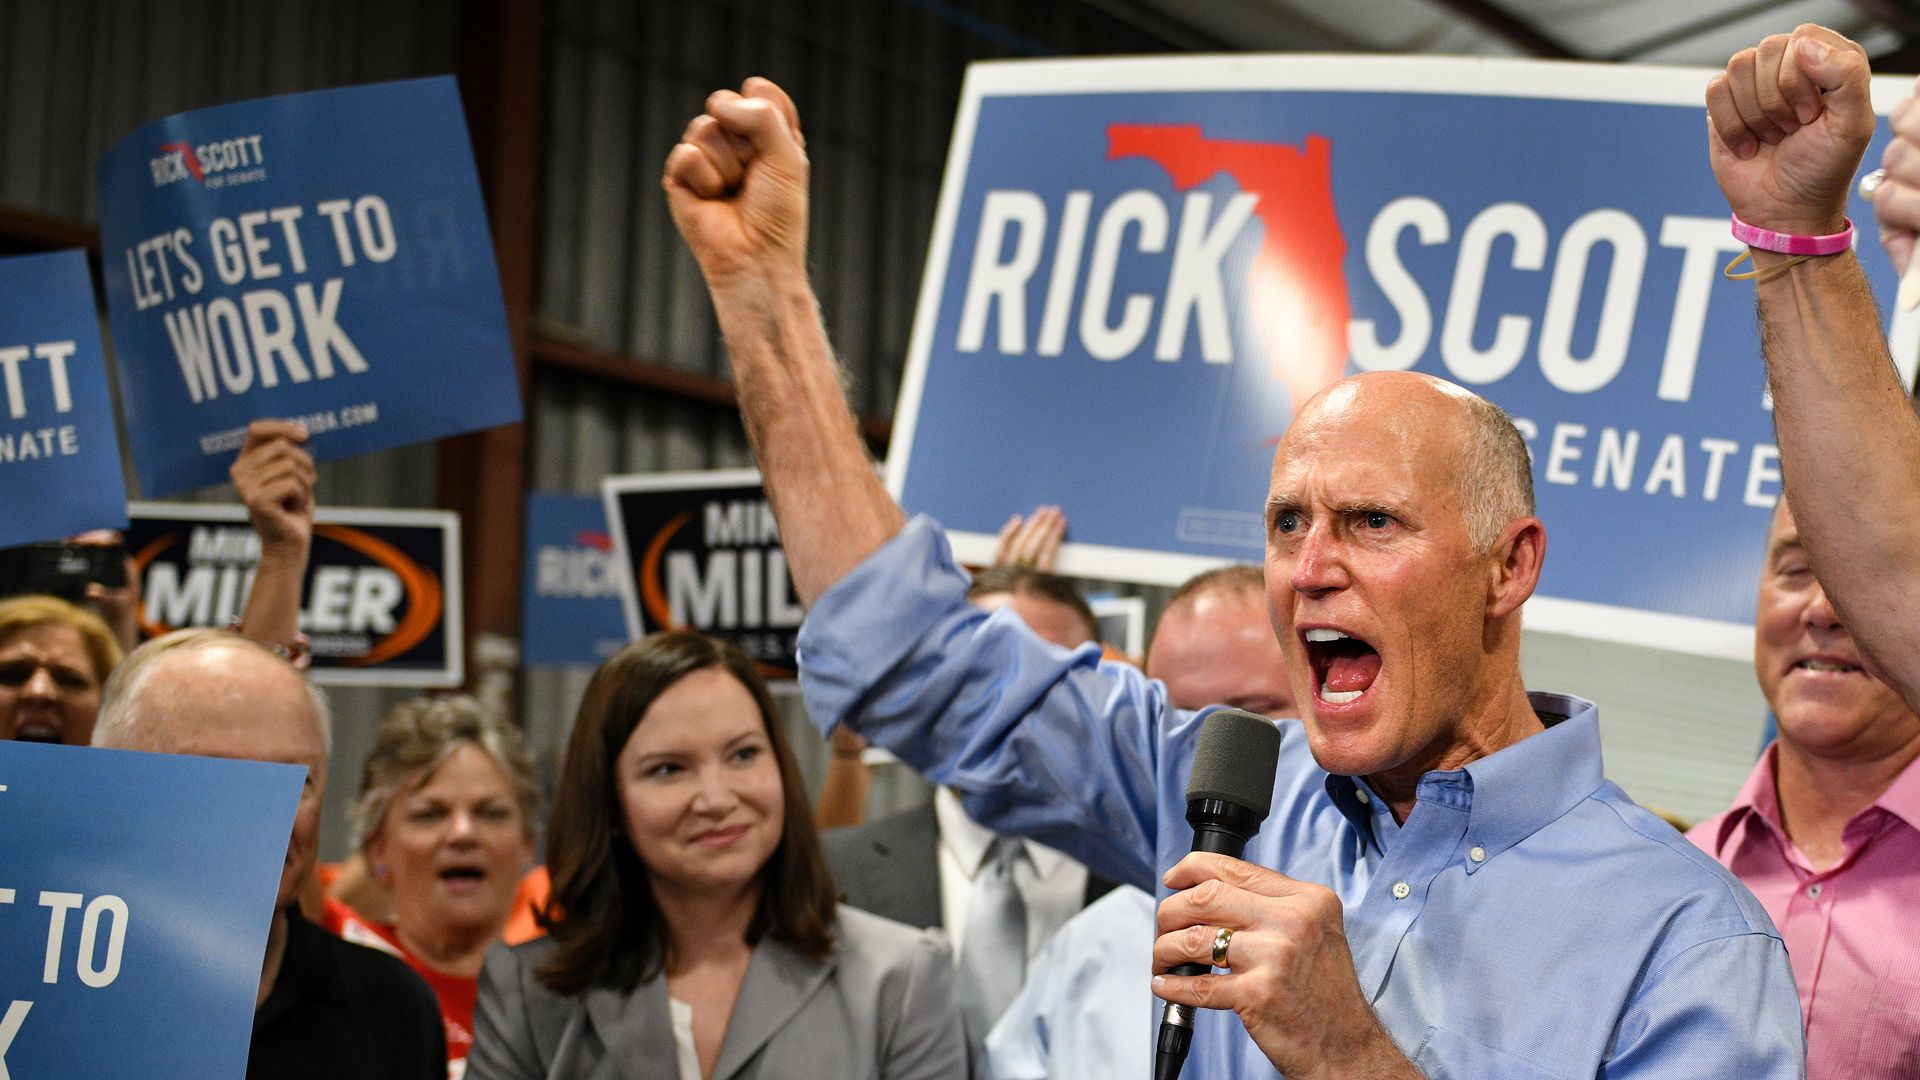 Florida Republican Senate candidate Rick Scott. Photo: Jeff J Mitchell/Getty Images